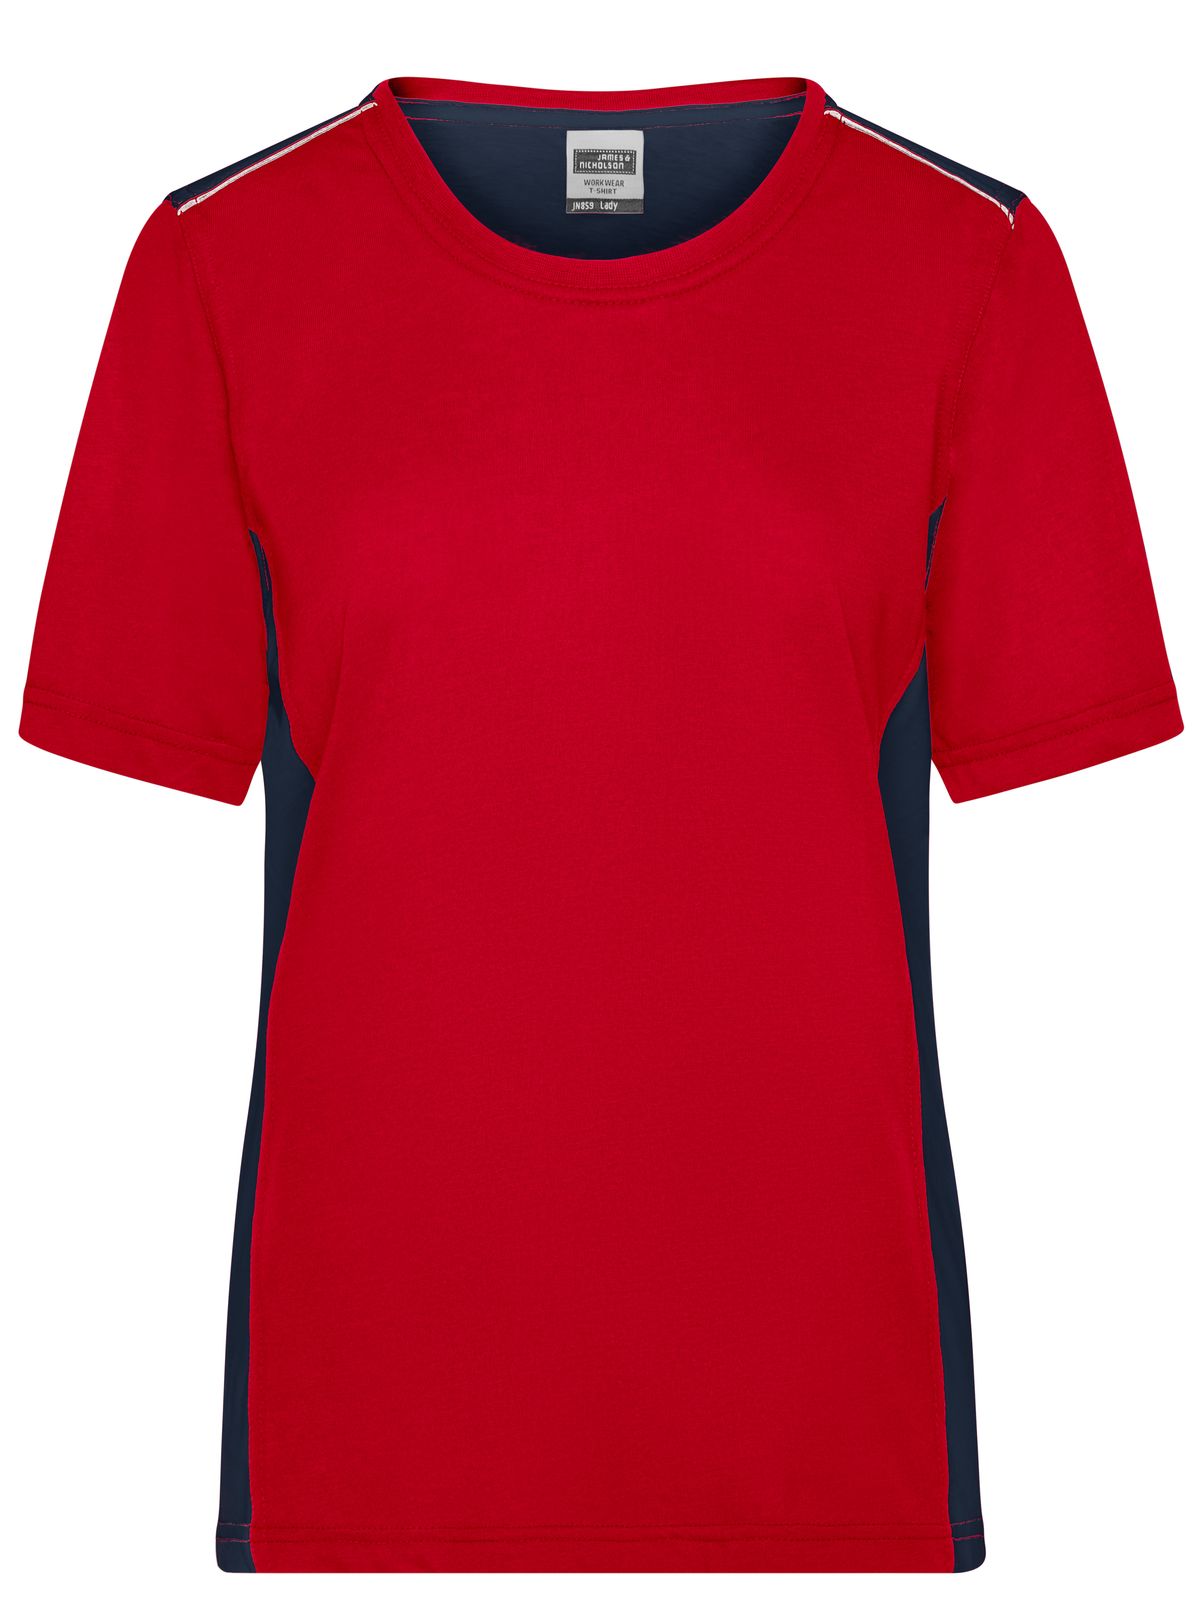 ladies-workwear-t-shirt-color-red-navy.webp